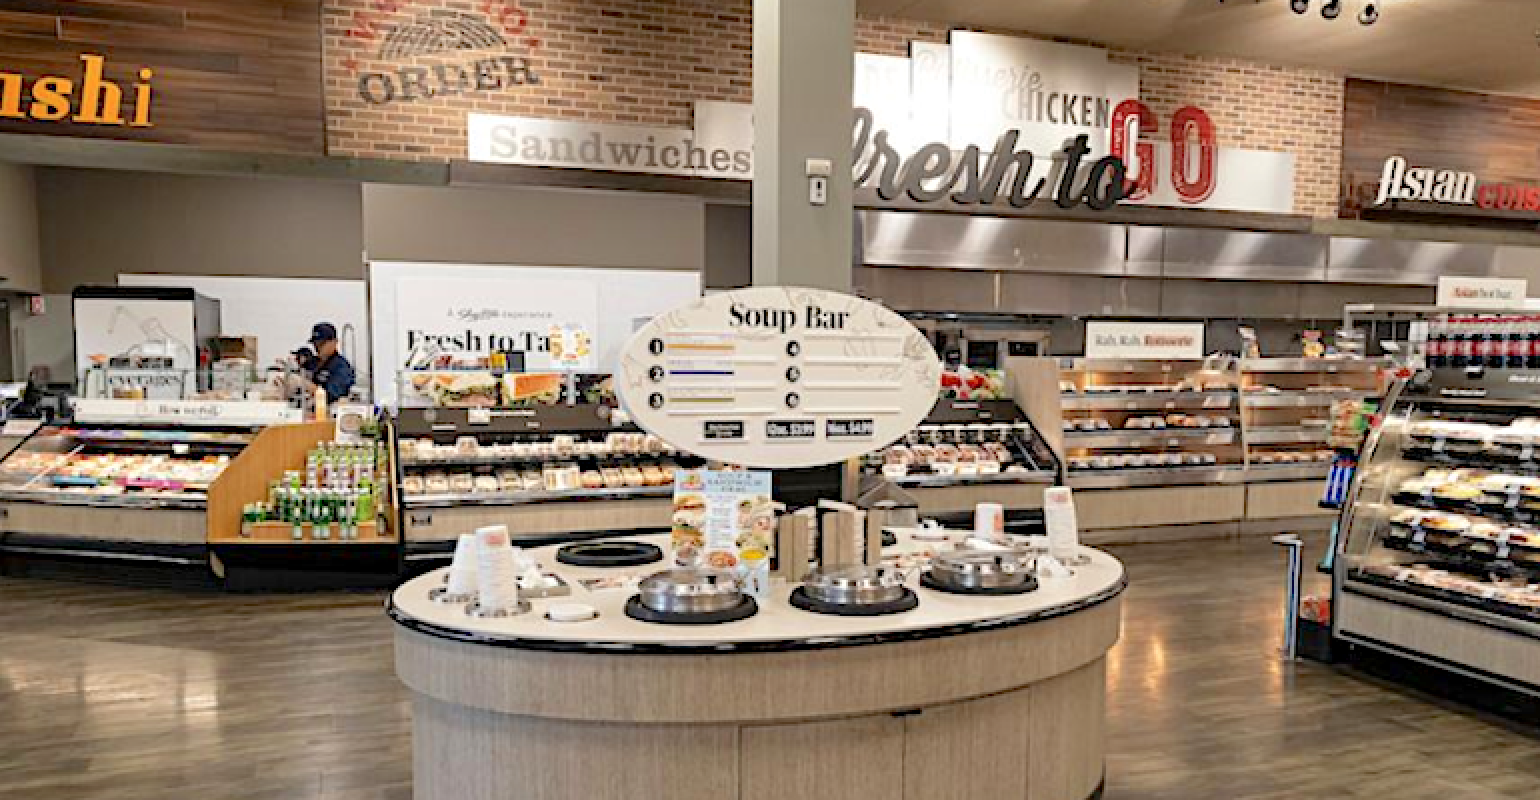 Deli prepared food: The powerhouse of grocery retailers, says Nielsen